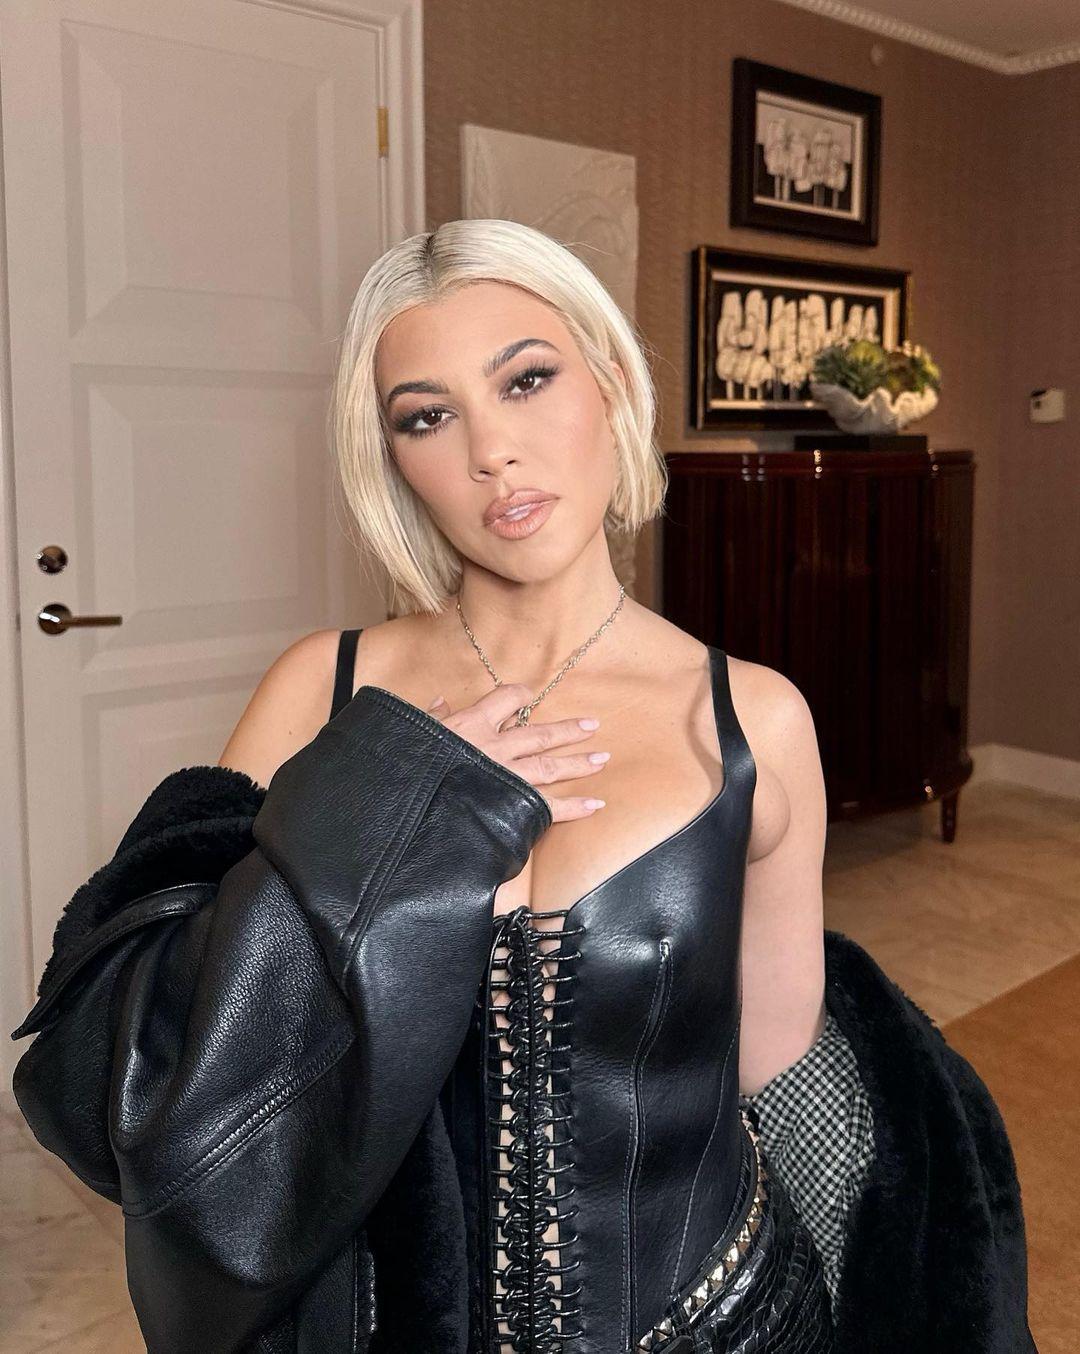 Kourtney Kardashian enters her blonde era